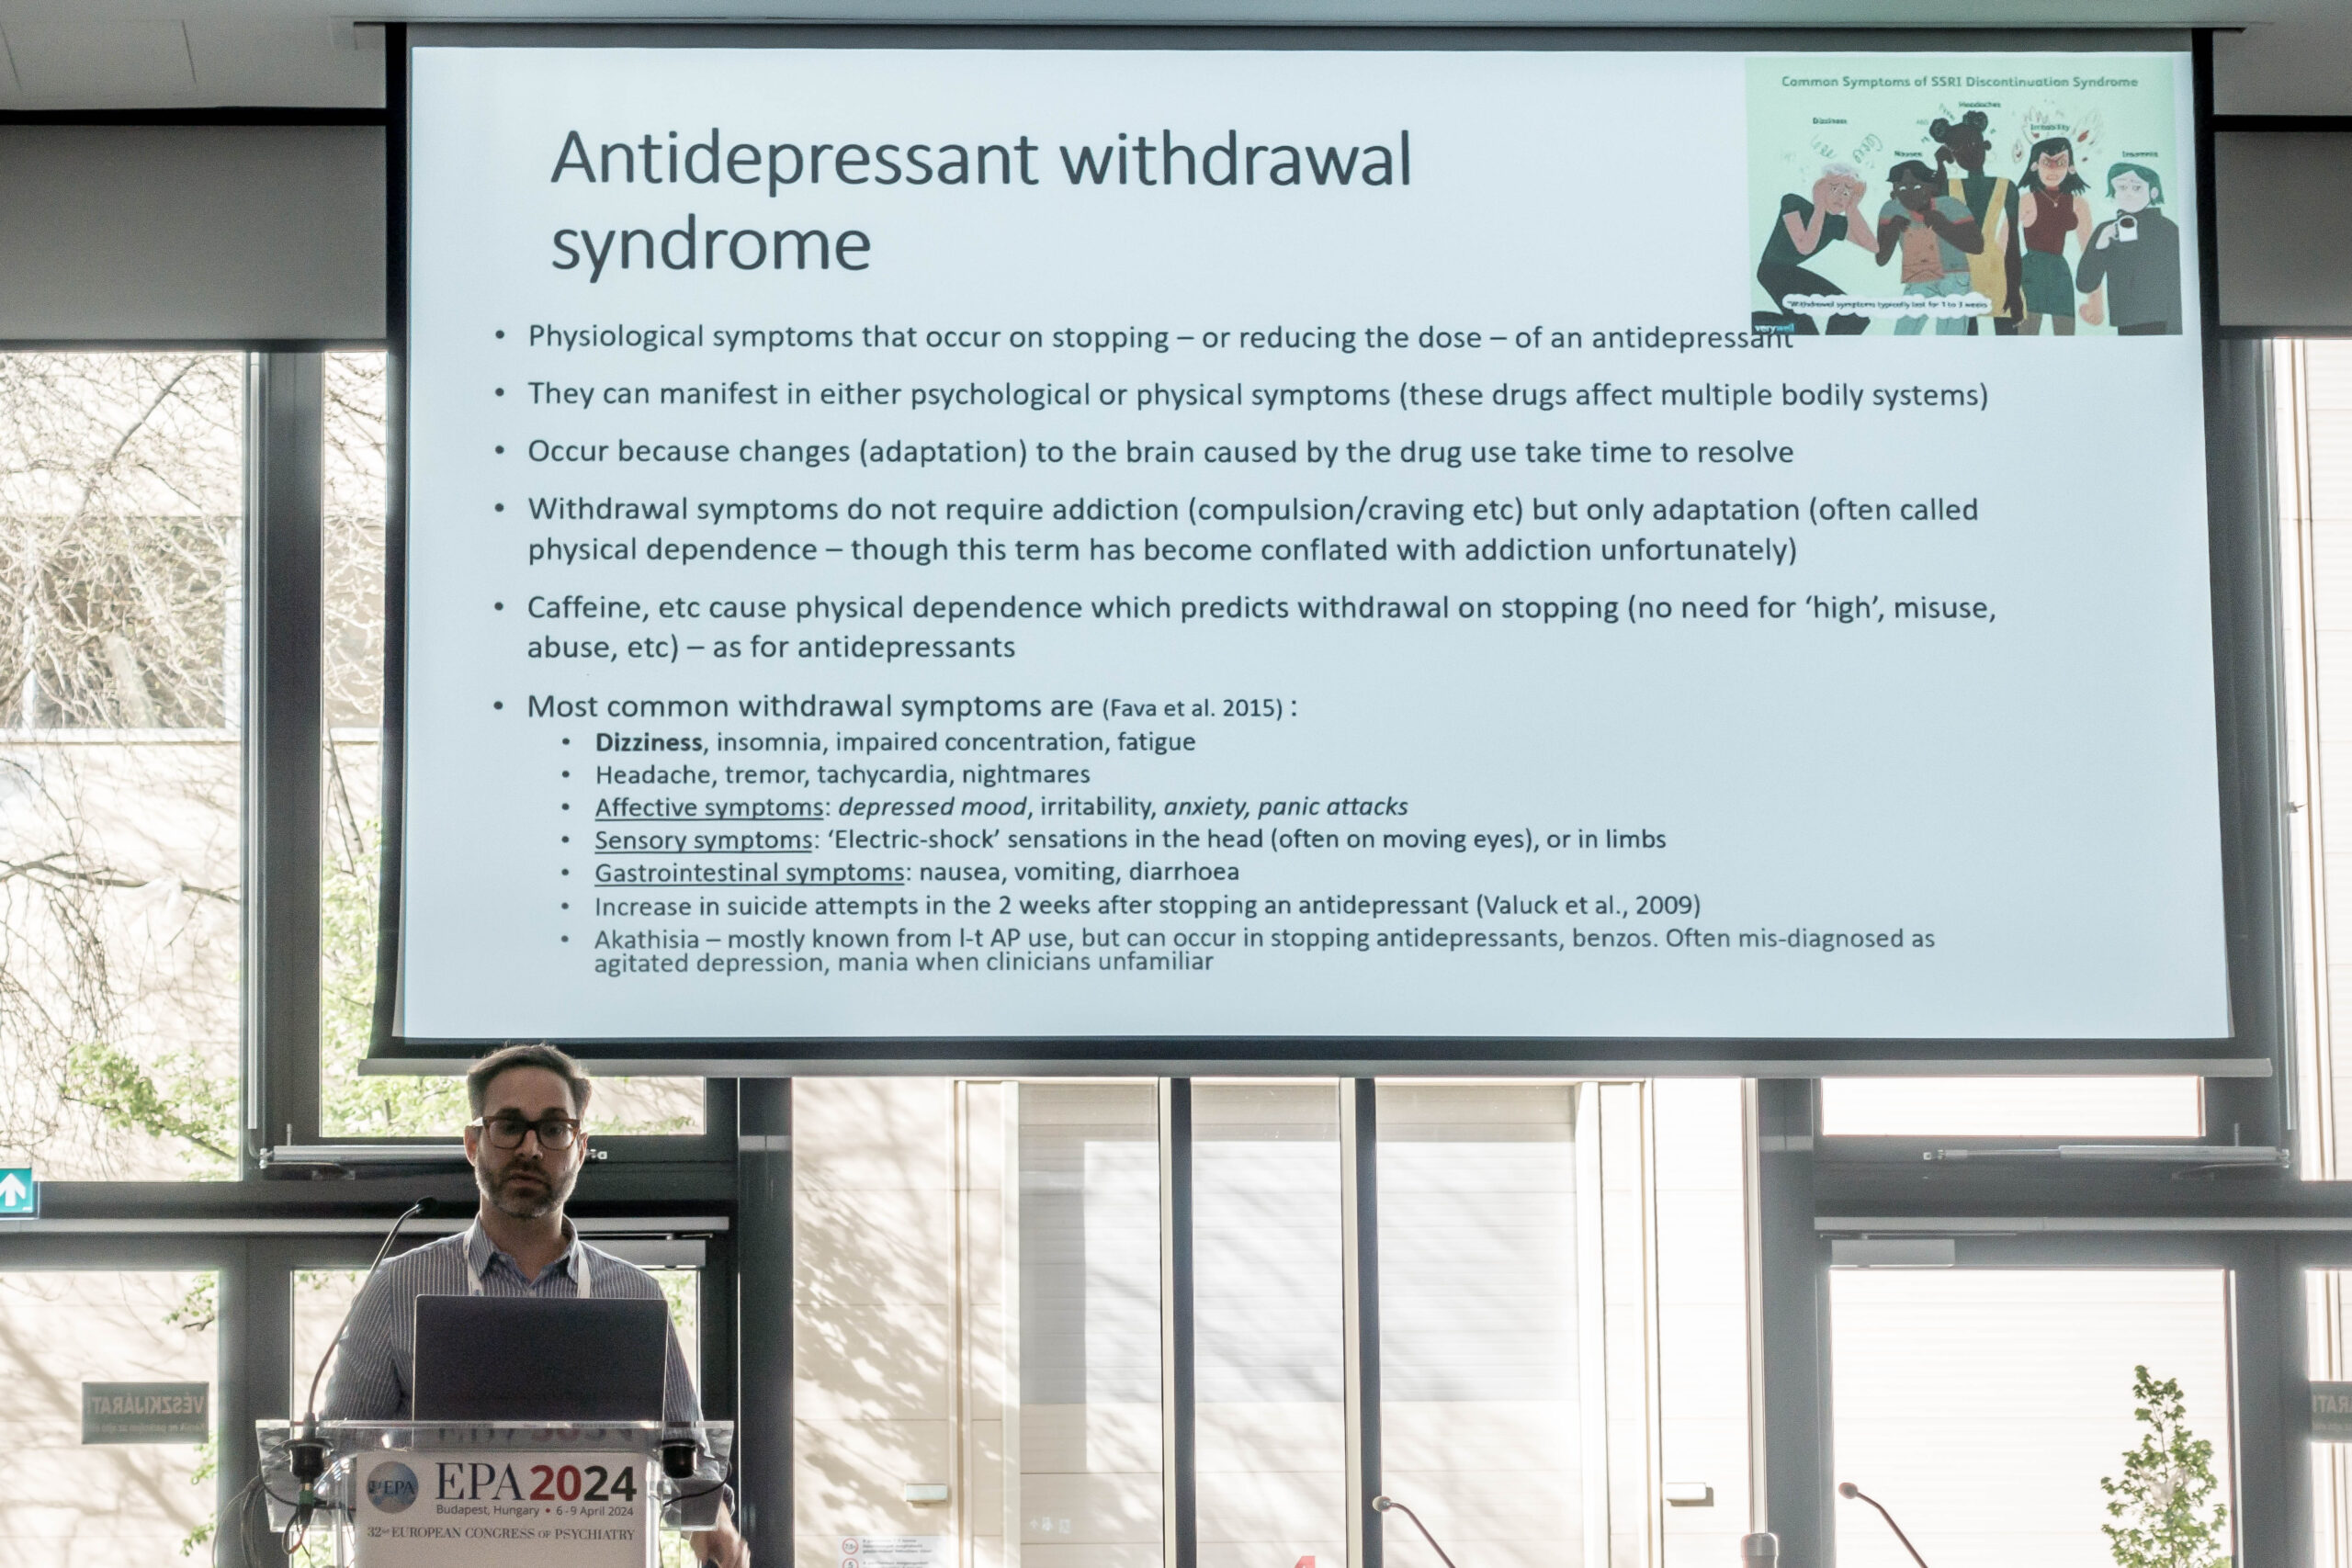 Dr Horowitz presenting findings on antidepressant withdrawal